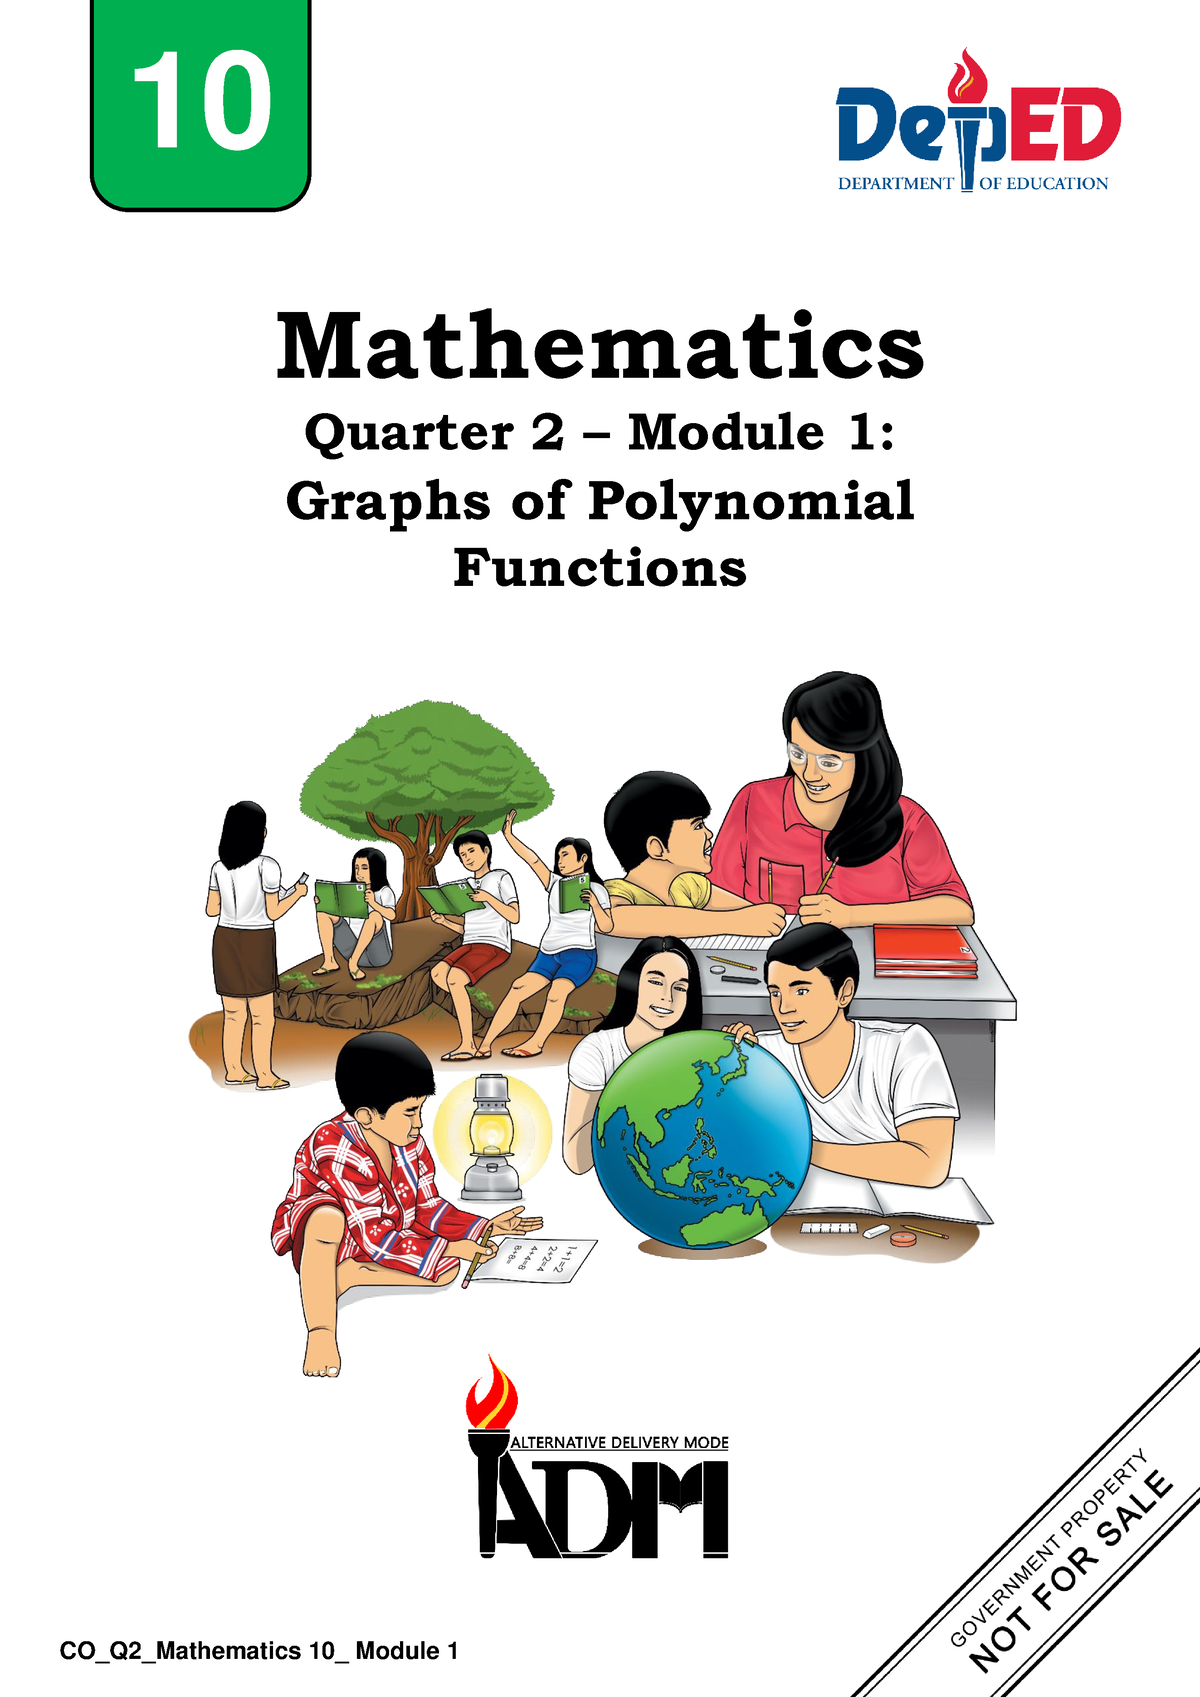 Q2m1 Sex Mathematics Quarter 2 Module 1 Graphs Of Polynomial Functions 10 Mathematics 4178